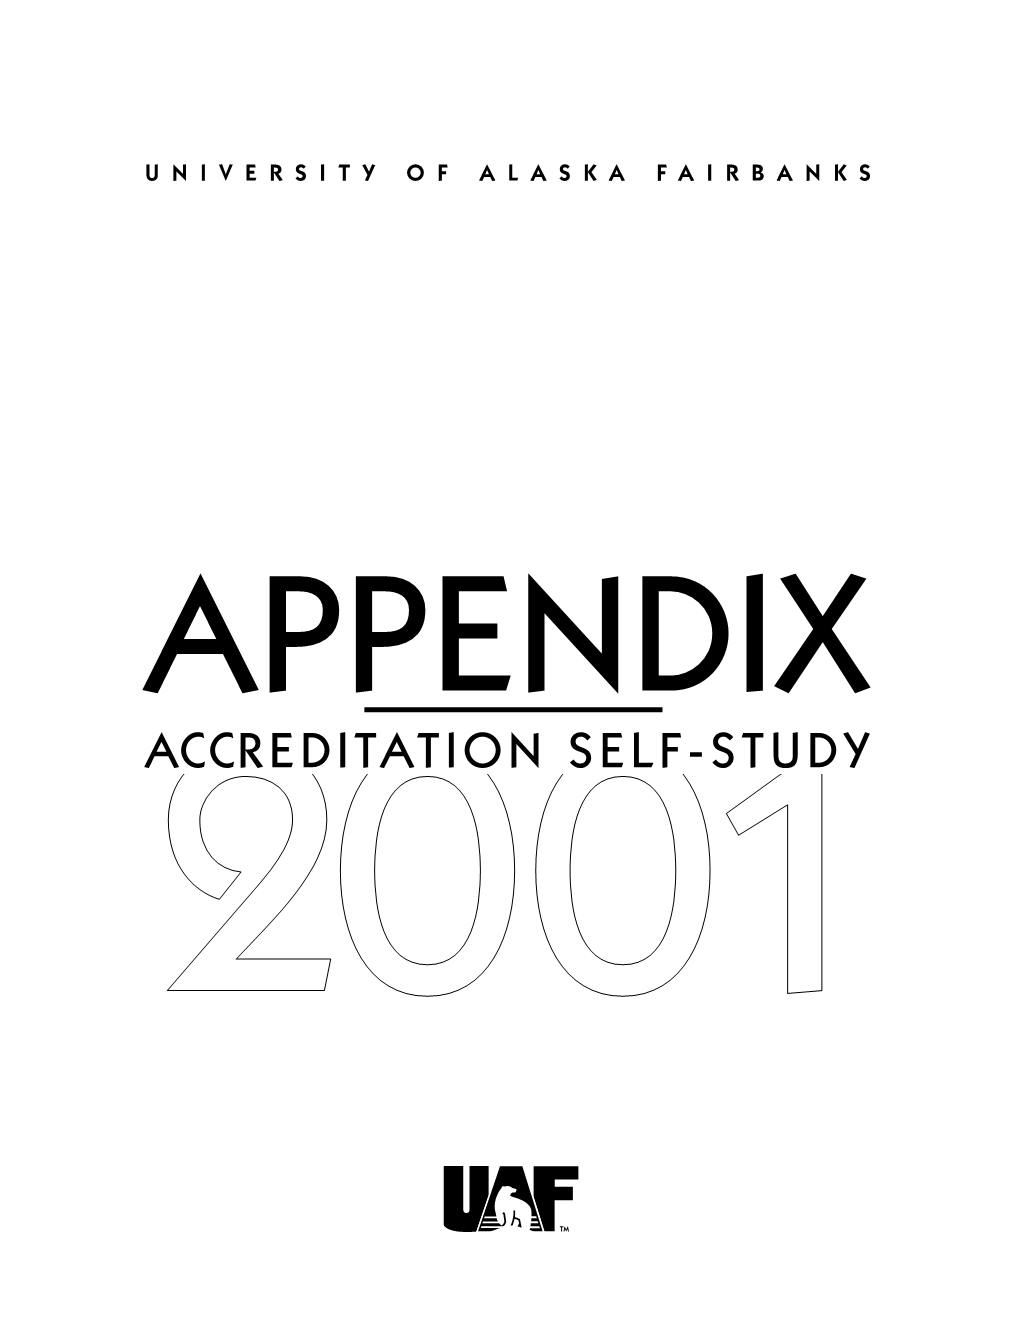 Accreditation Self-Study University of Alaska Fairbanks Appendix: Standard One